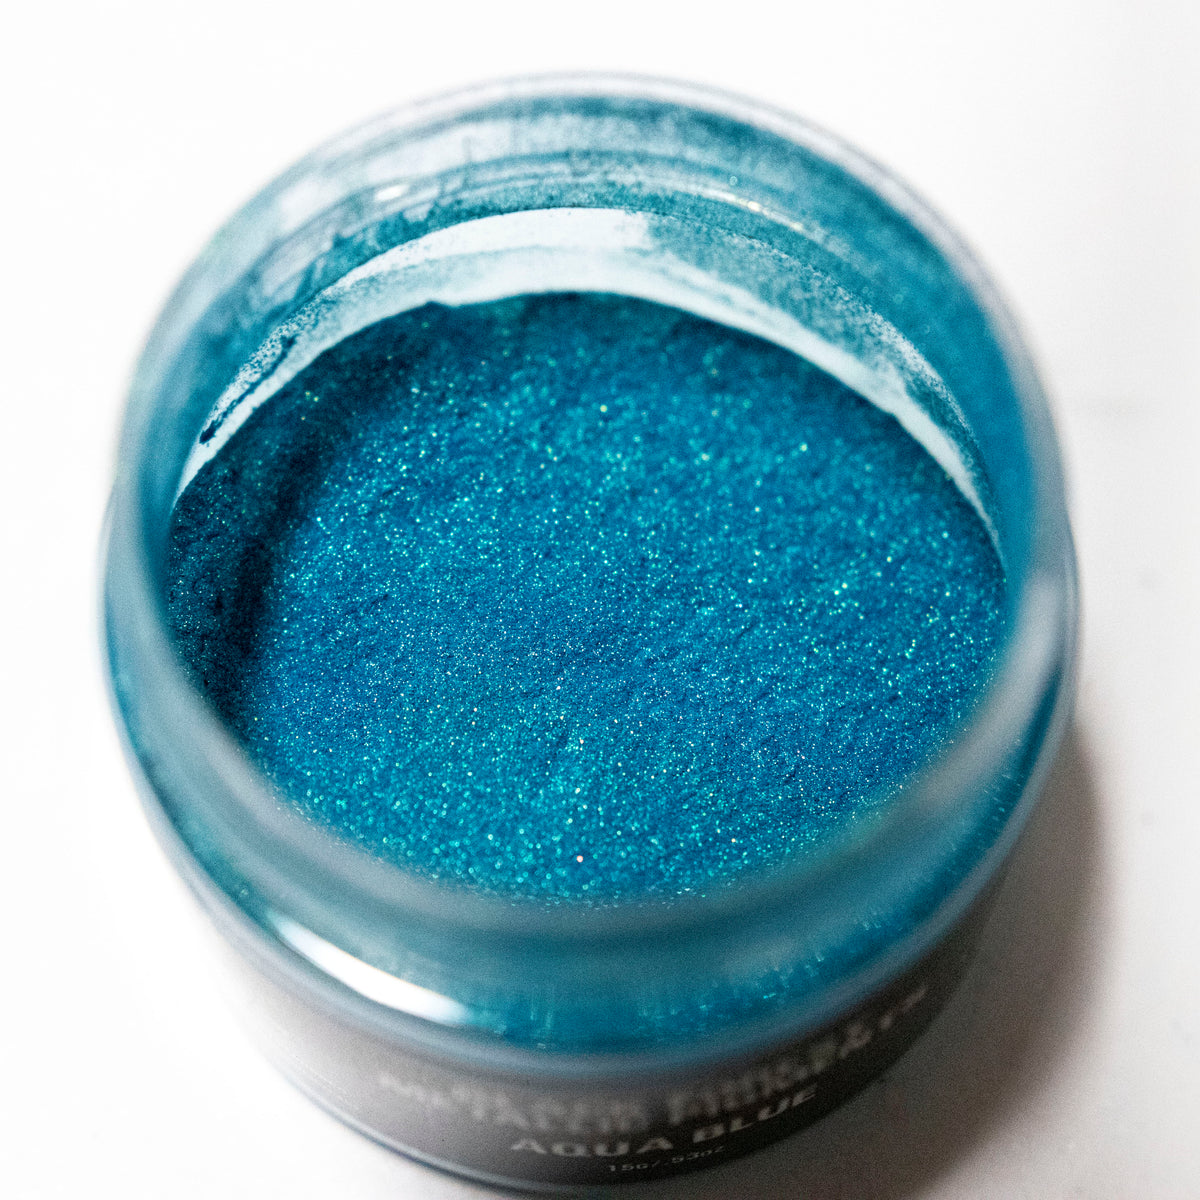 Metallic Pigment - Aqua Blue